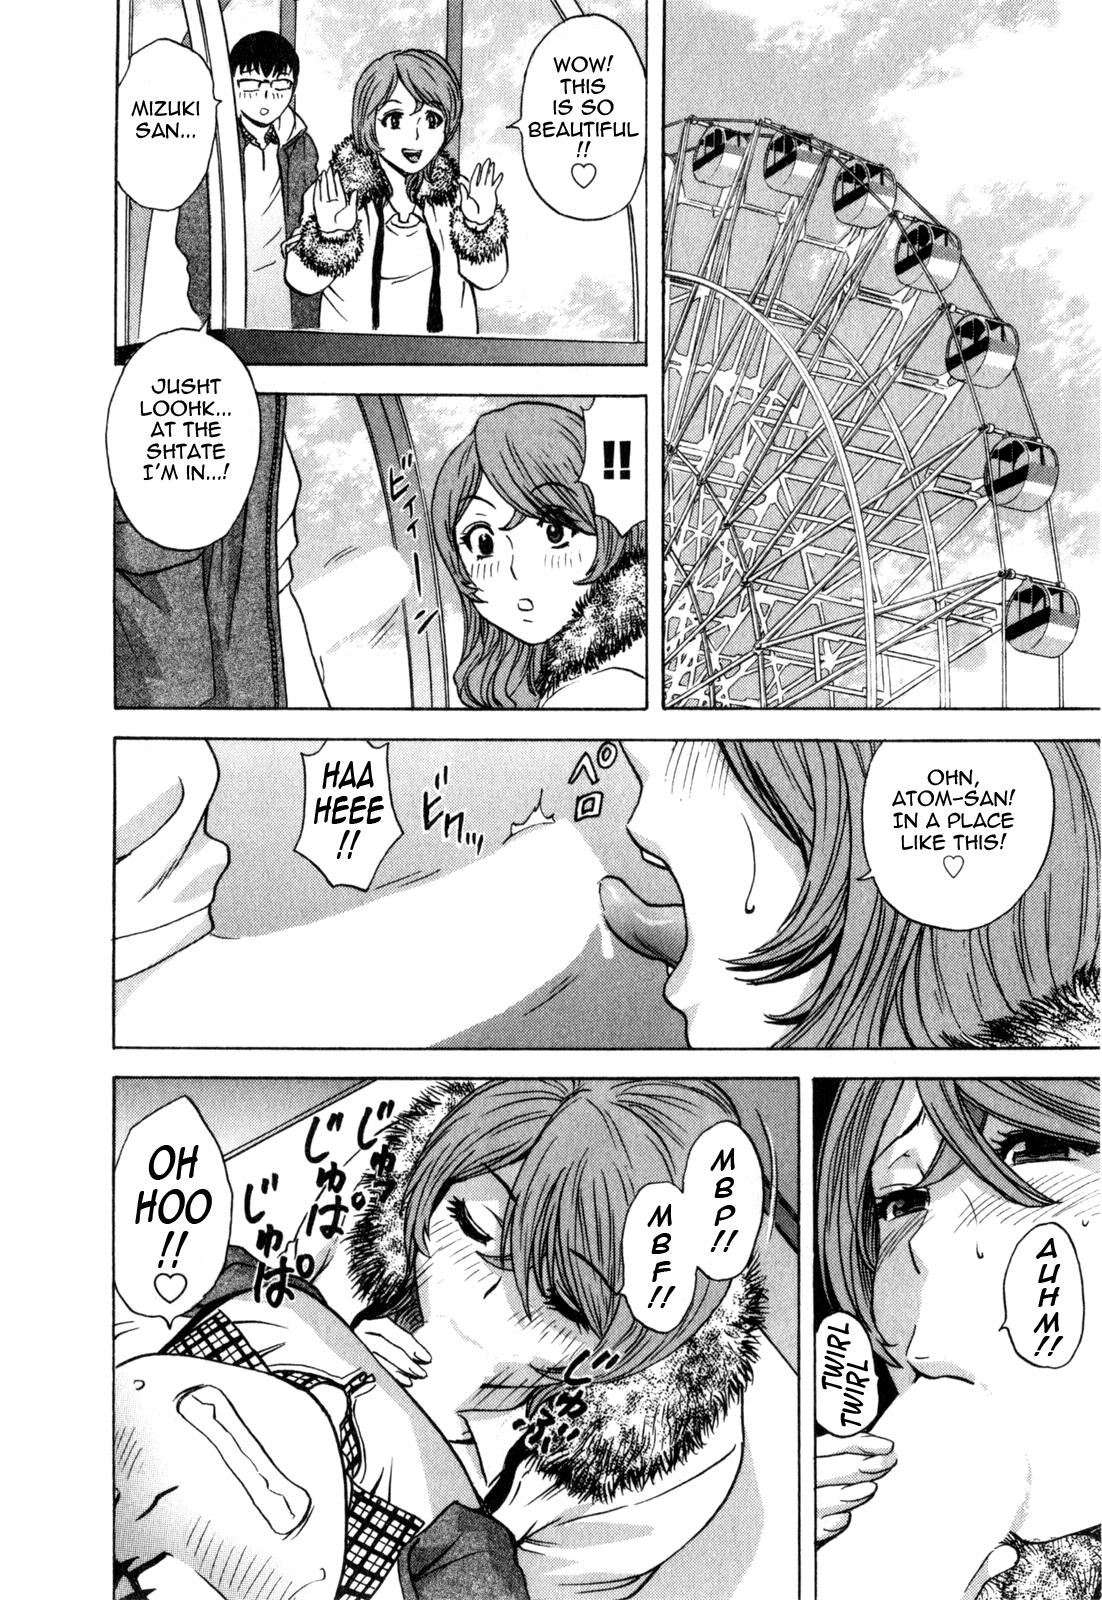 [Hidemaru] Life with Married Women Just Like a Manga 3 - Ch. 1-8 [English] {Tadanohito} 34